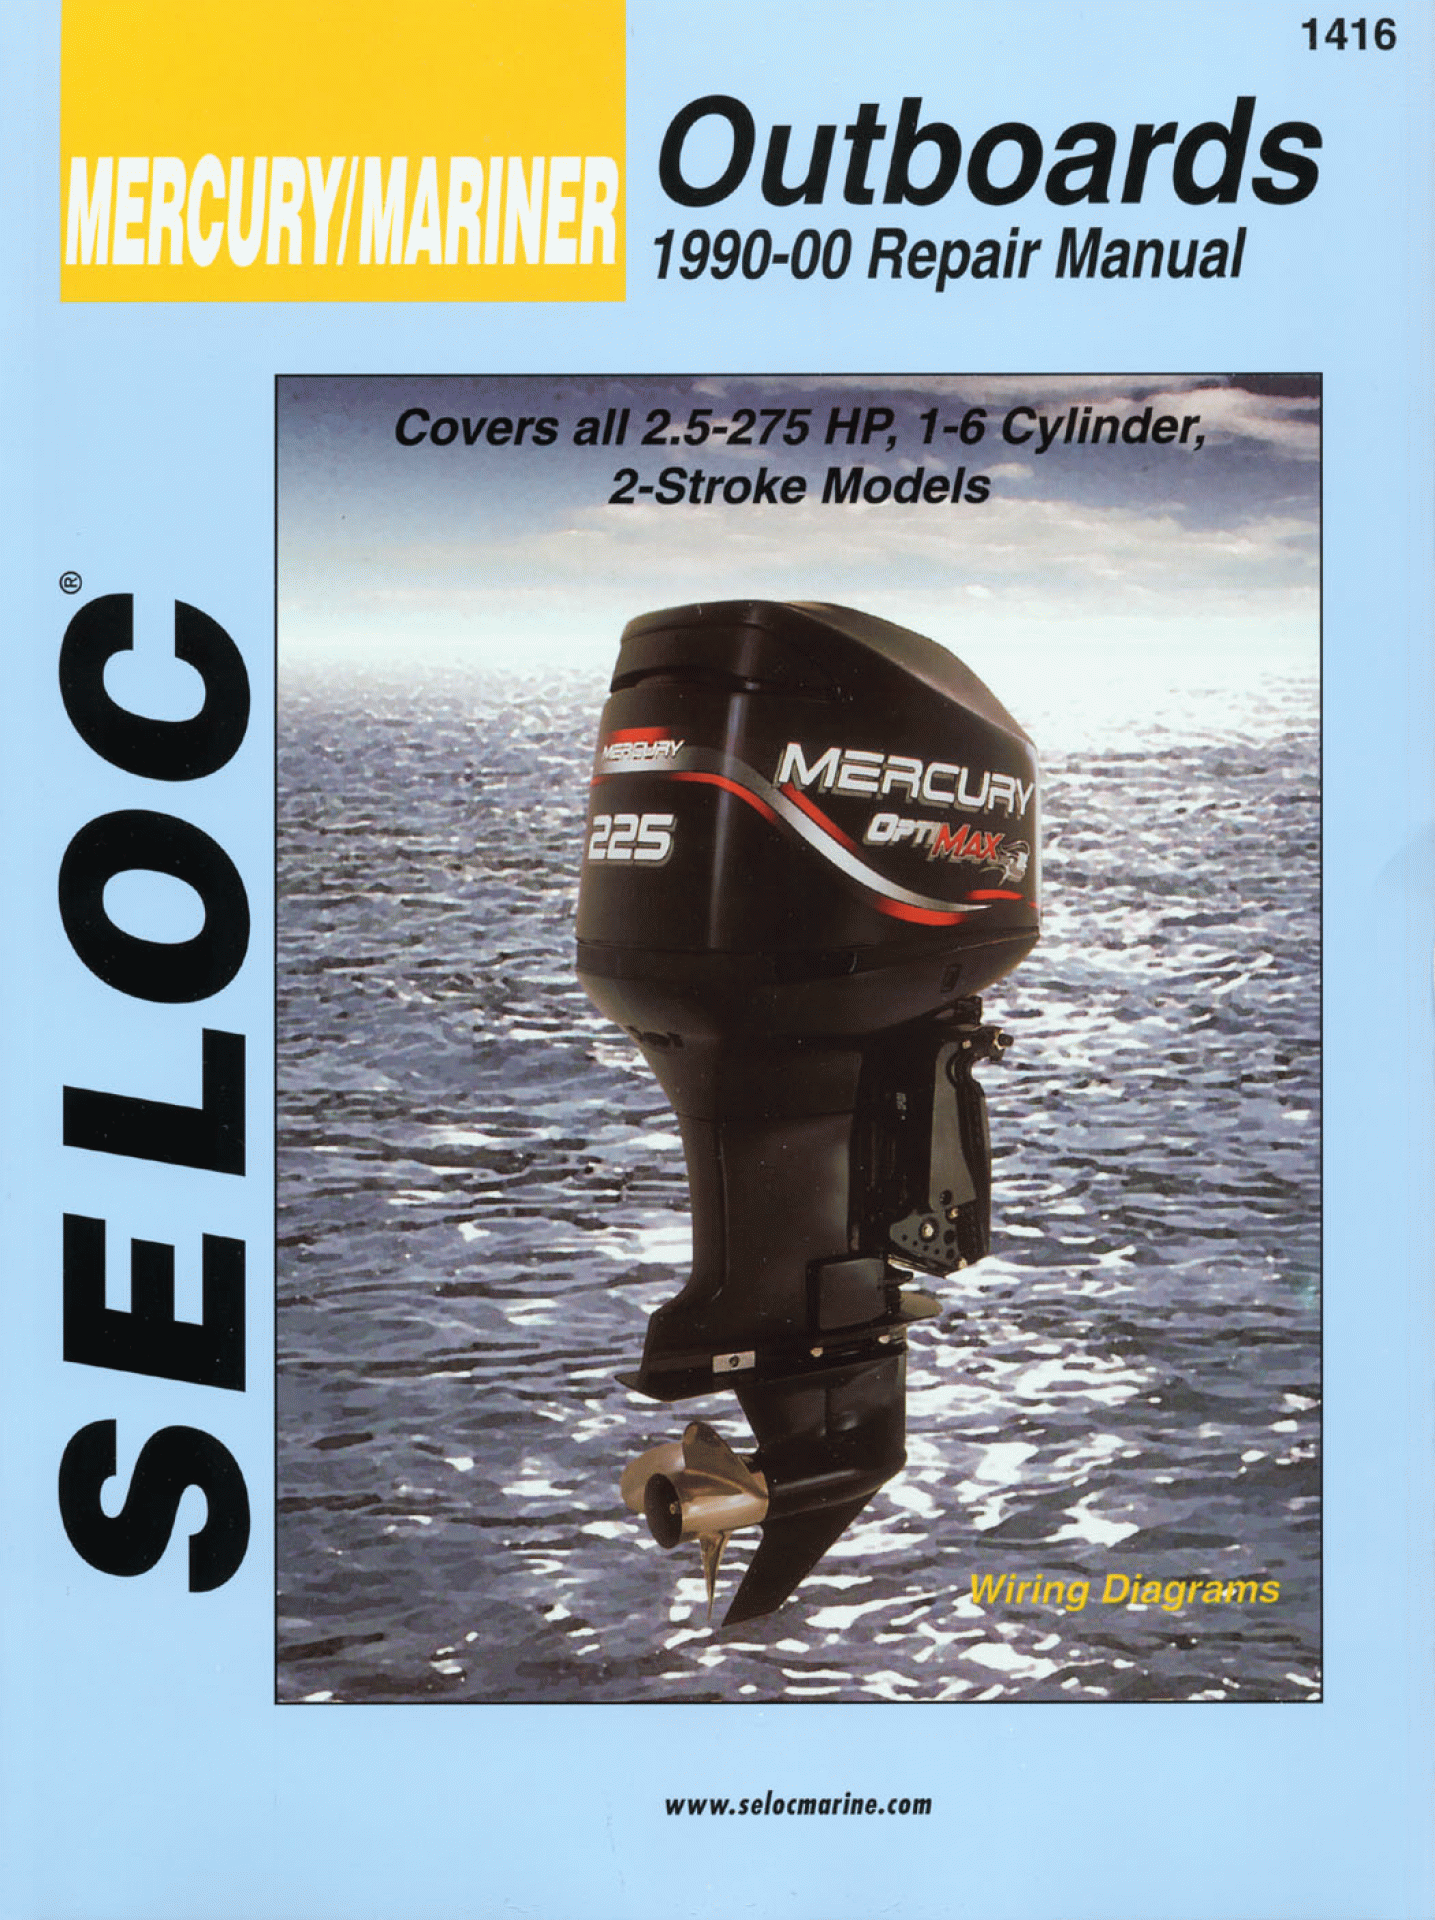 SELOC PUBLISHING | 18-01416 | REPAIR MANUAL Mercury/Mariner Outboards All 2-Stroke Engines 1990-00